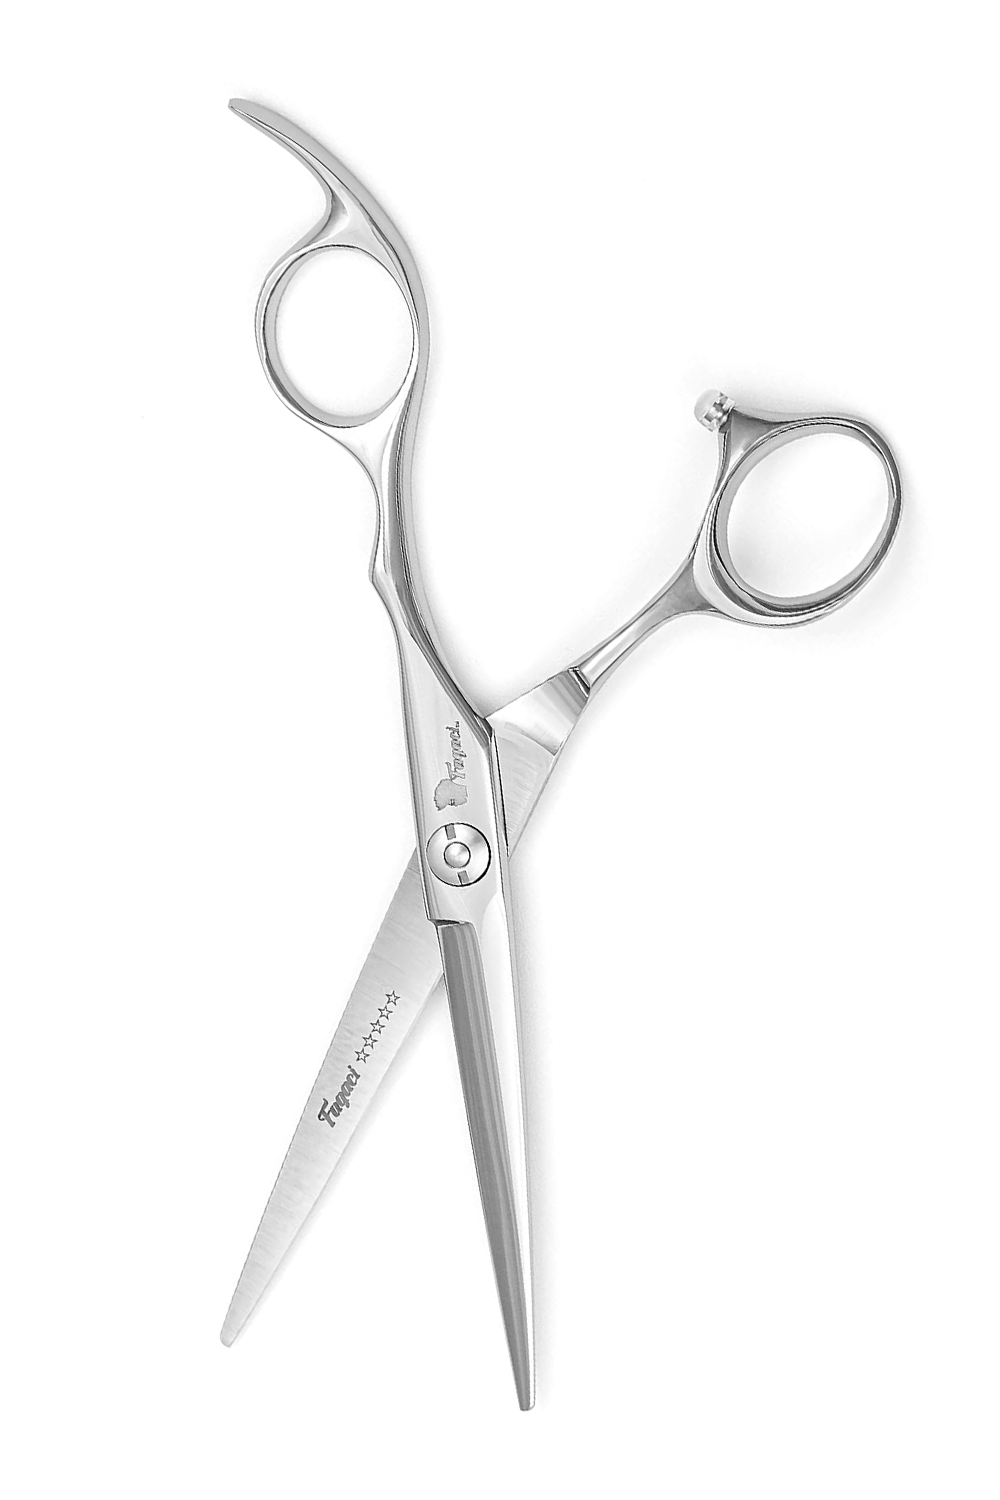 Organim Care Products 6 inch Professional Hair Cutting Scissors Black  Carbon Funner Steel  JioMart